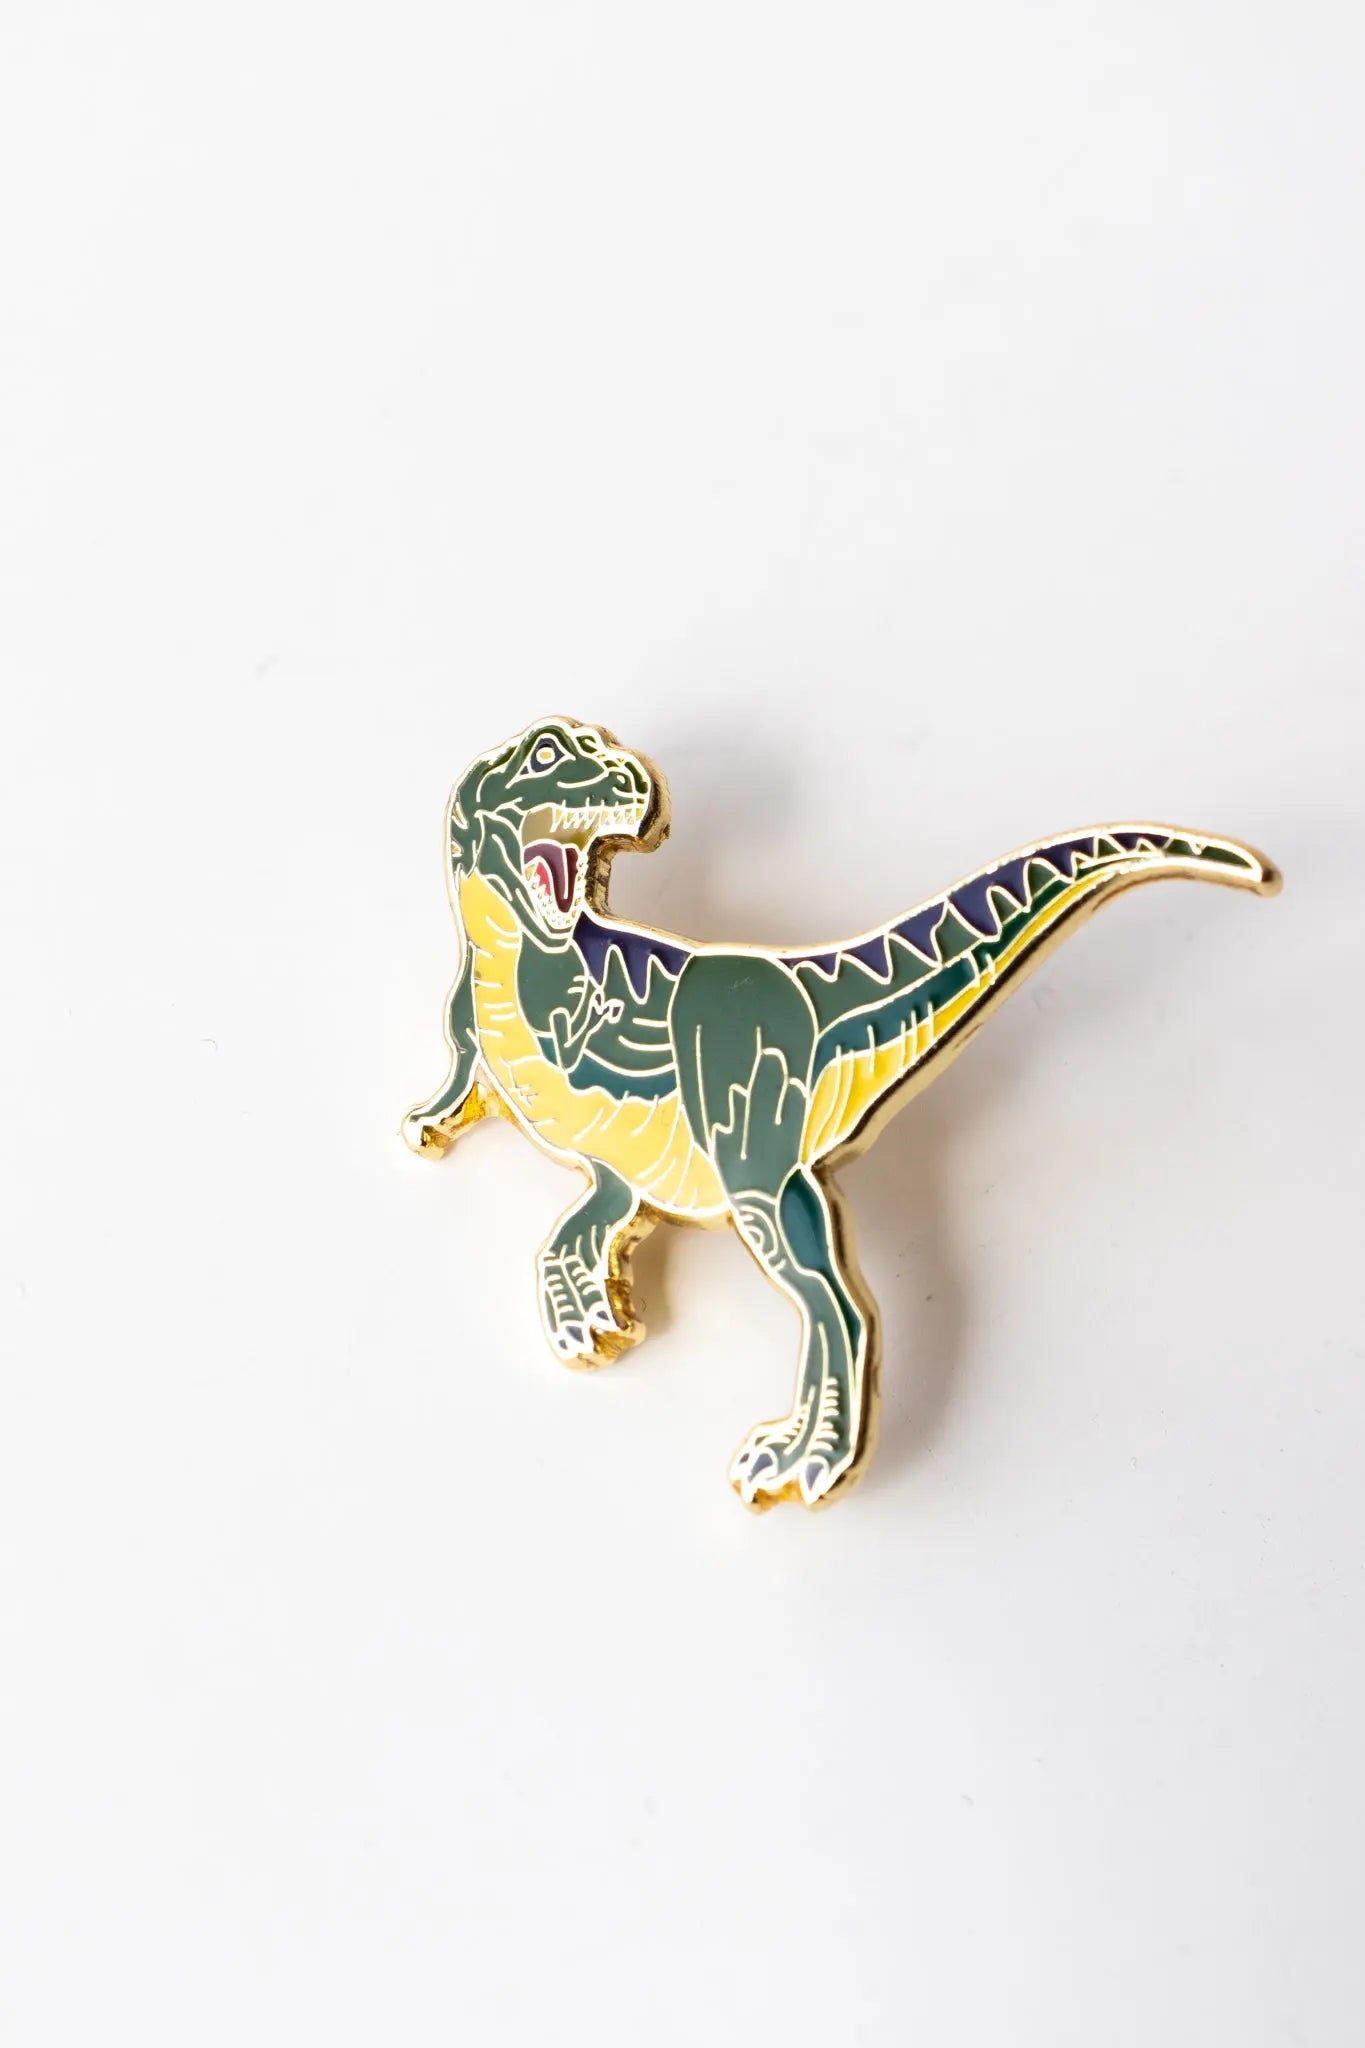 Tyrannosaurus Rex Pin (without Feathers)